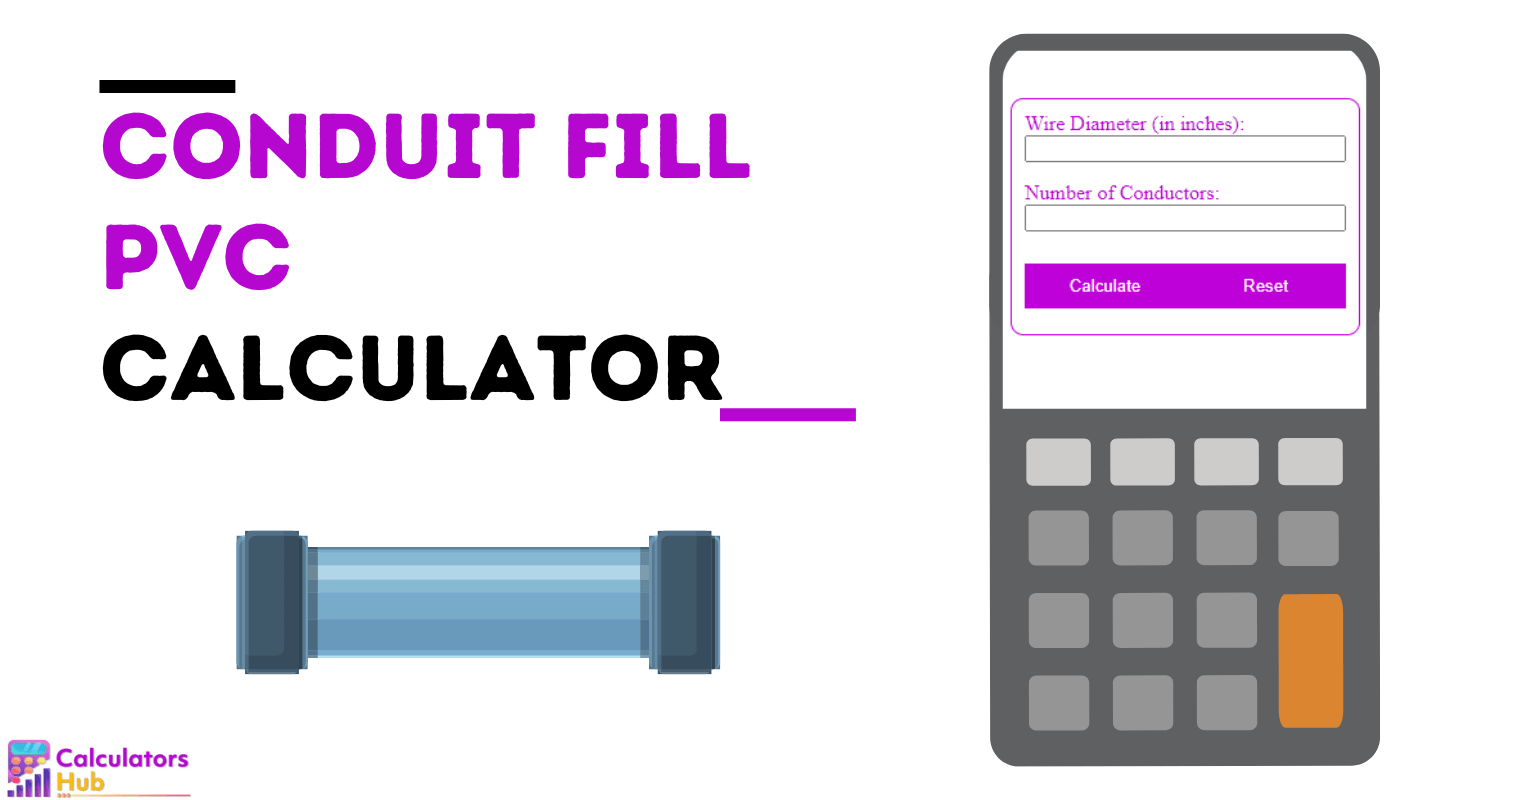 Conduit Fill PVC Calculator